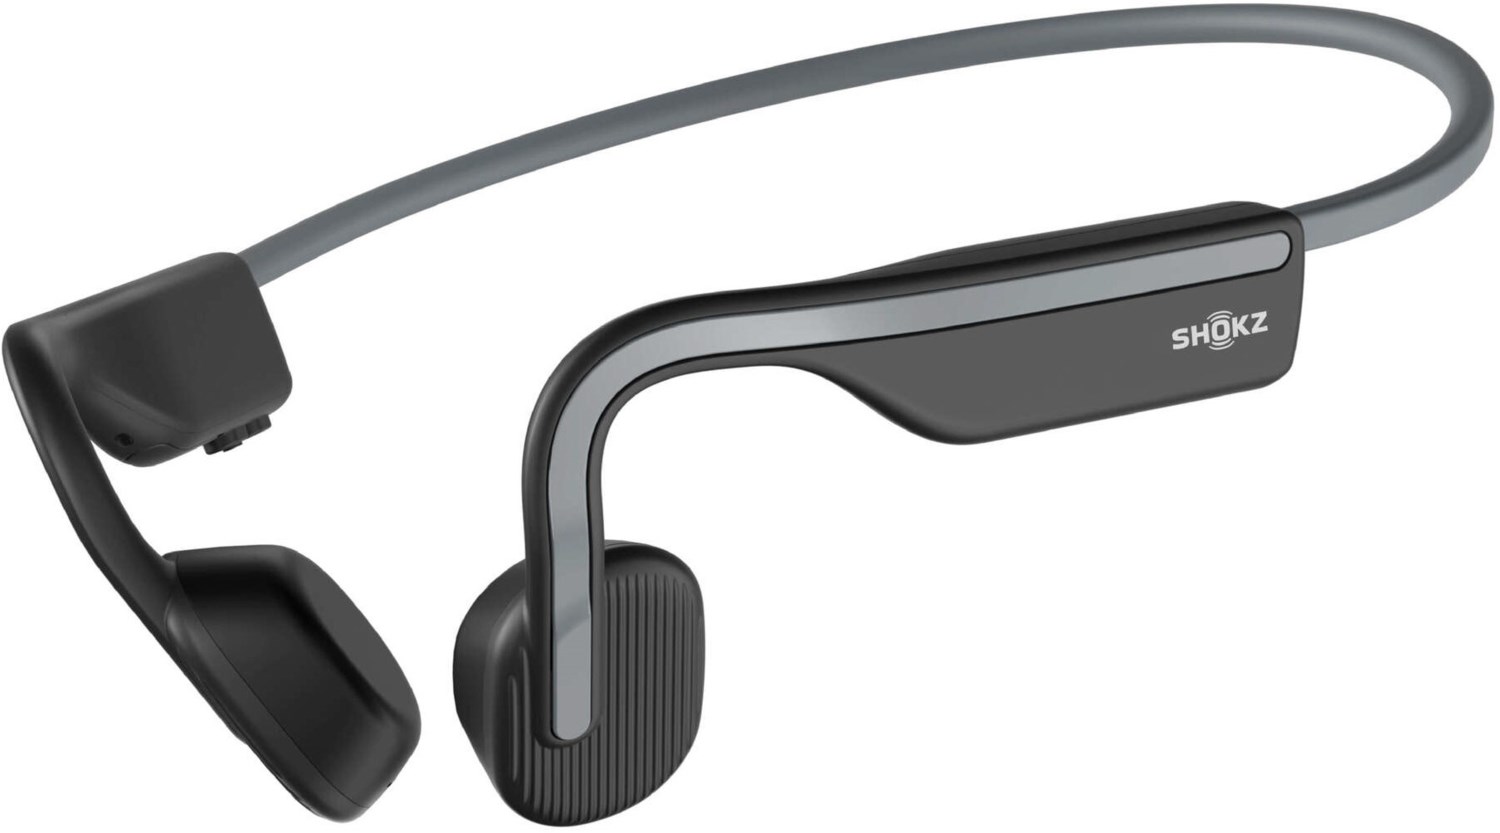 OpenMove Knochenschall Bluetooth-Kopfhörer grau